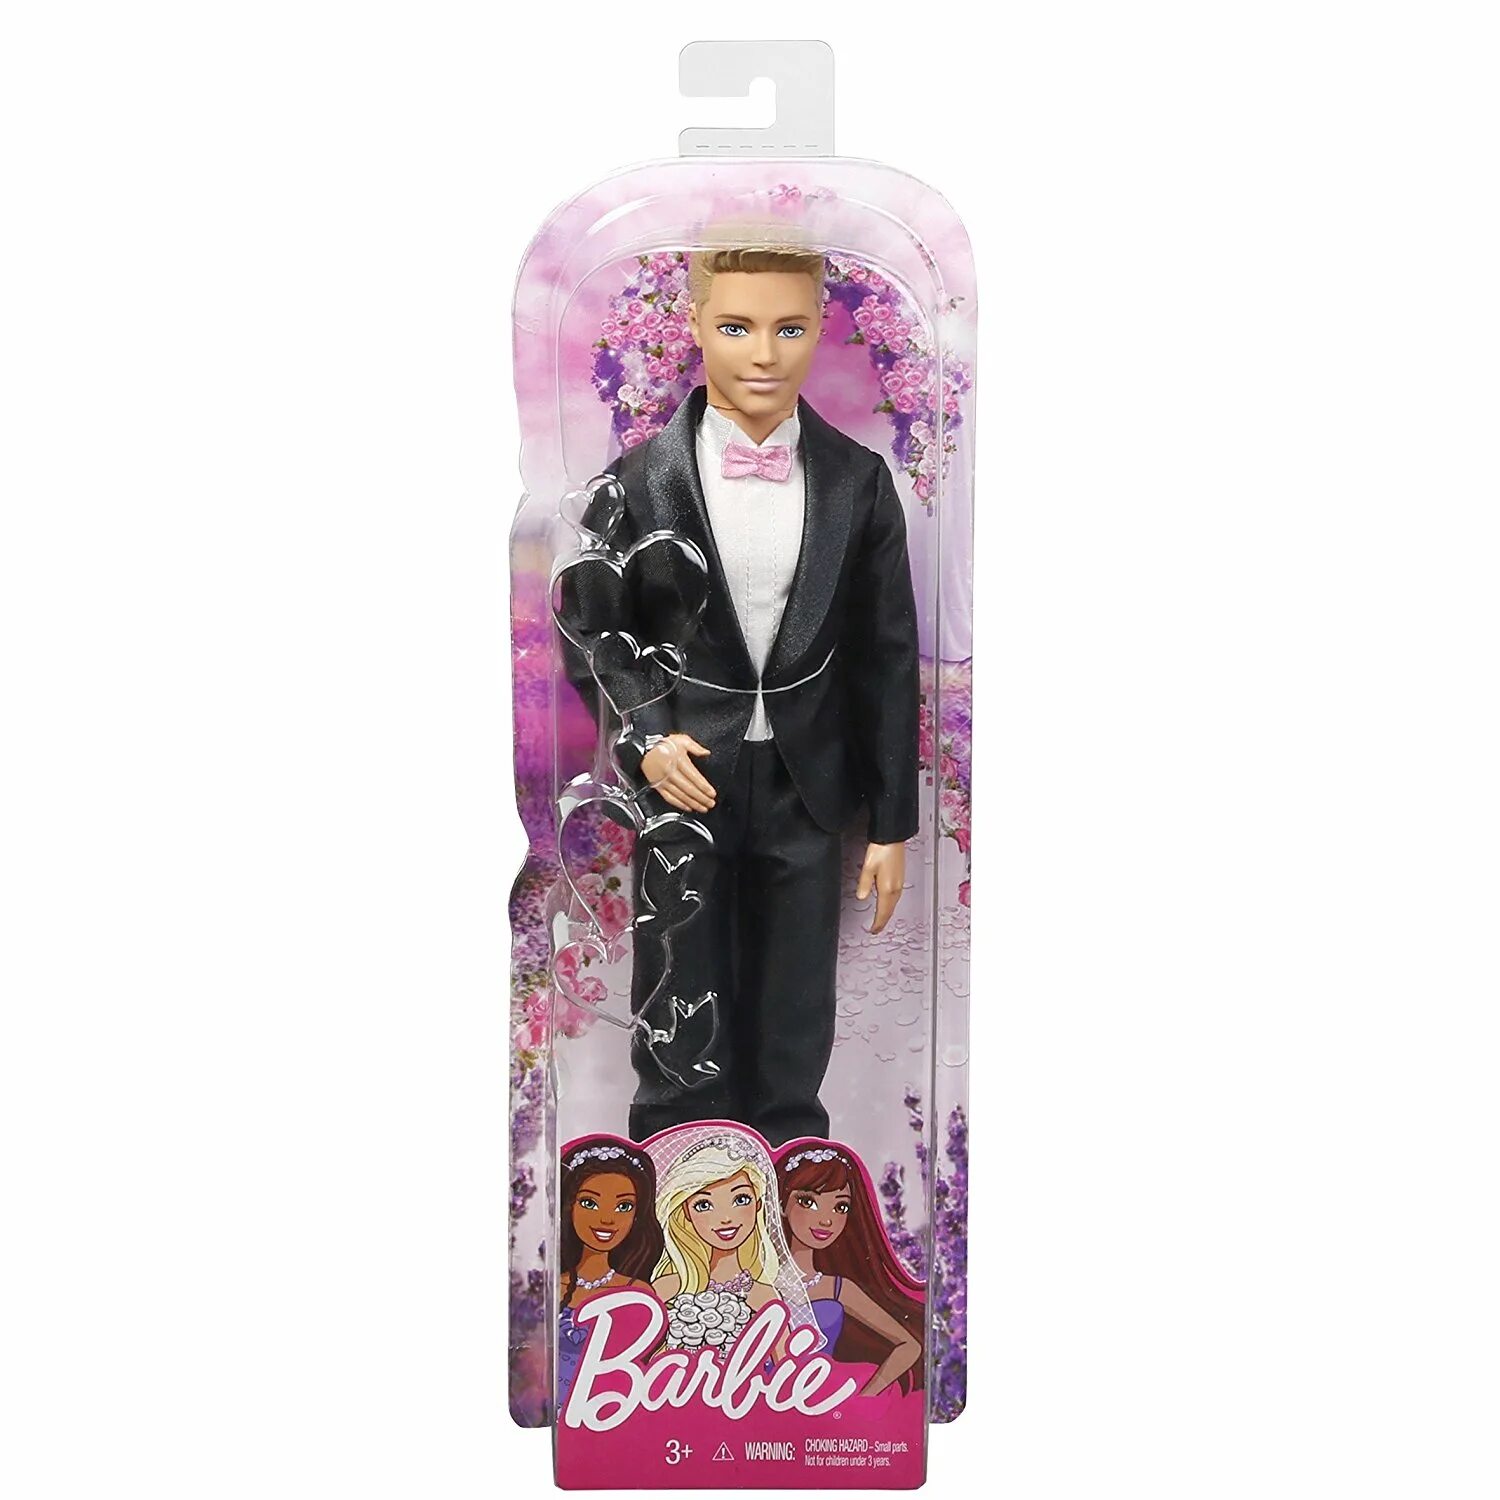 Кукла кен купить. Dvp39 Barbie Кен. Кукла Barbie dvp39 жених. Кукла Кен жених. Кен жених Кен.